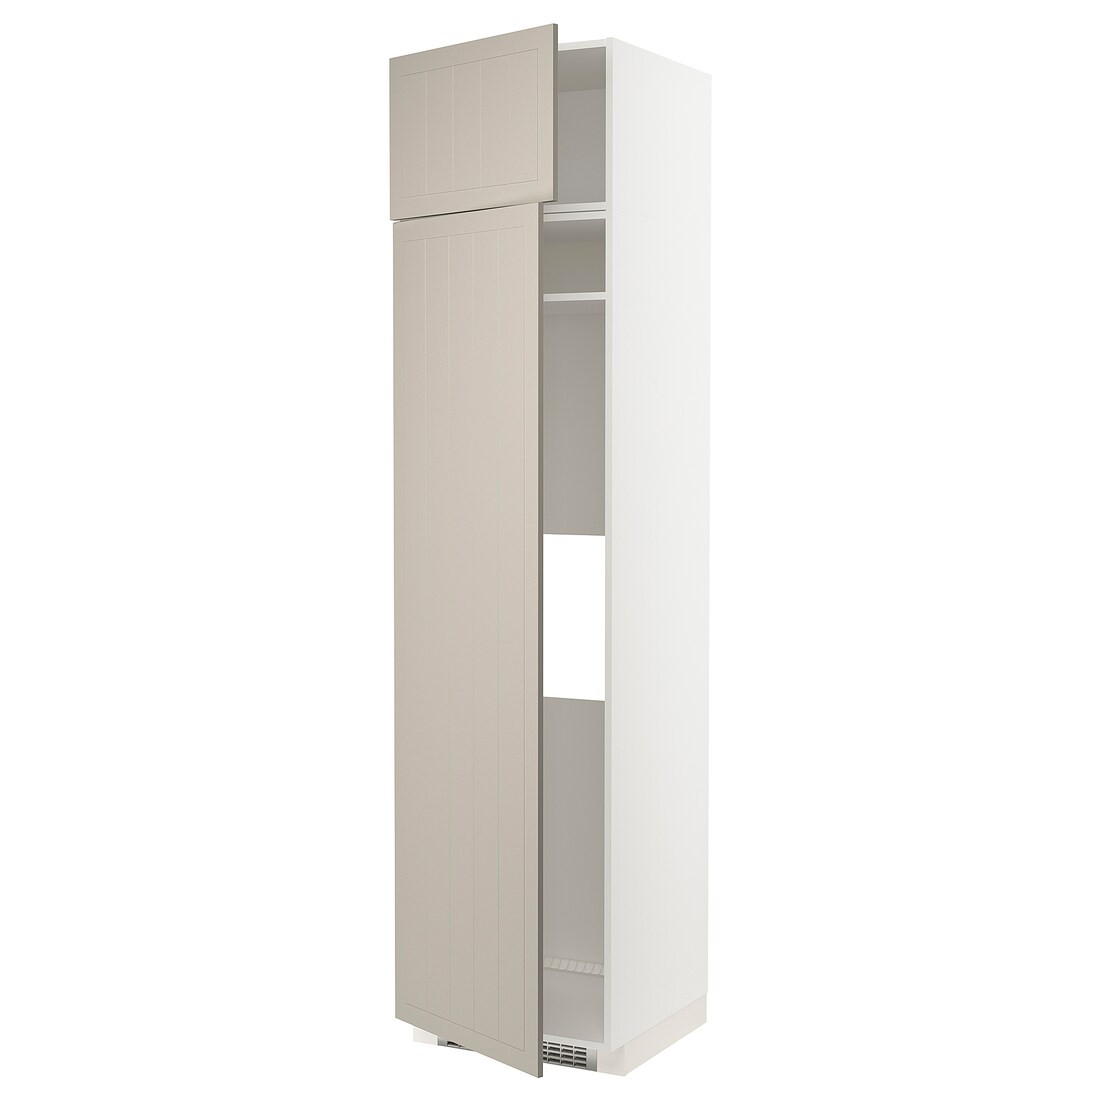 METOD МЕТОД Высокий шкаф для холодильника / морозильника, белый / Stensund бежевый, 60x60x240 см